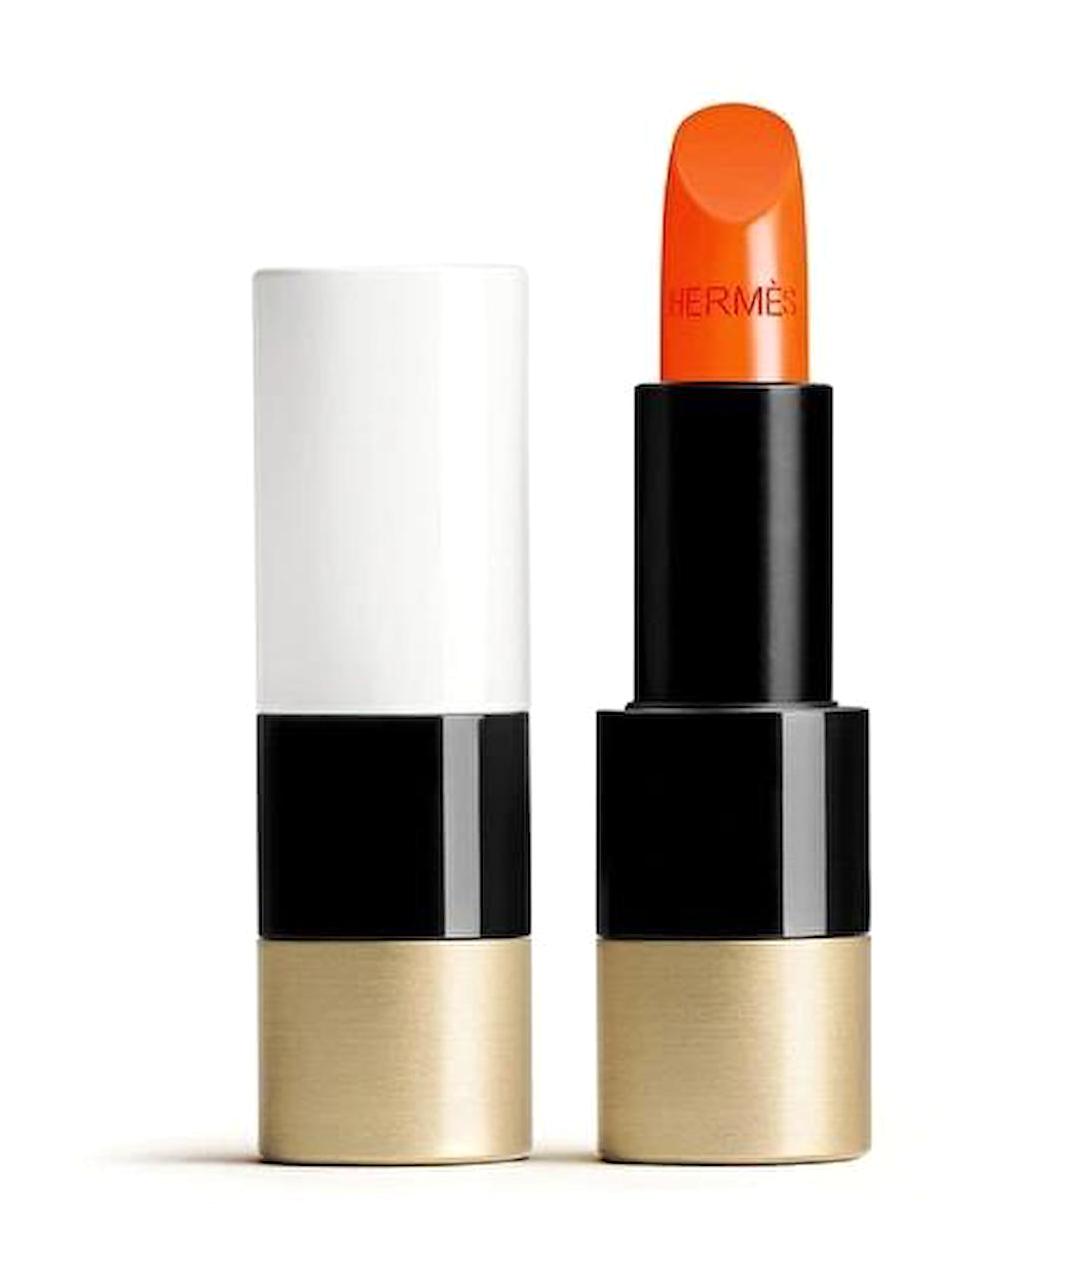 Hermes 33 Orange Boîte Parlak Krem Lipstick Ruj